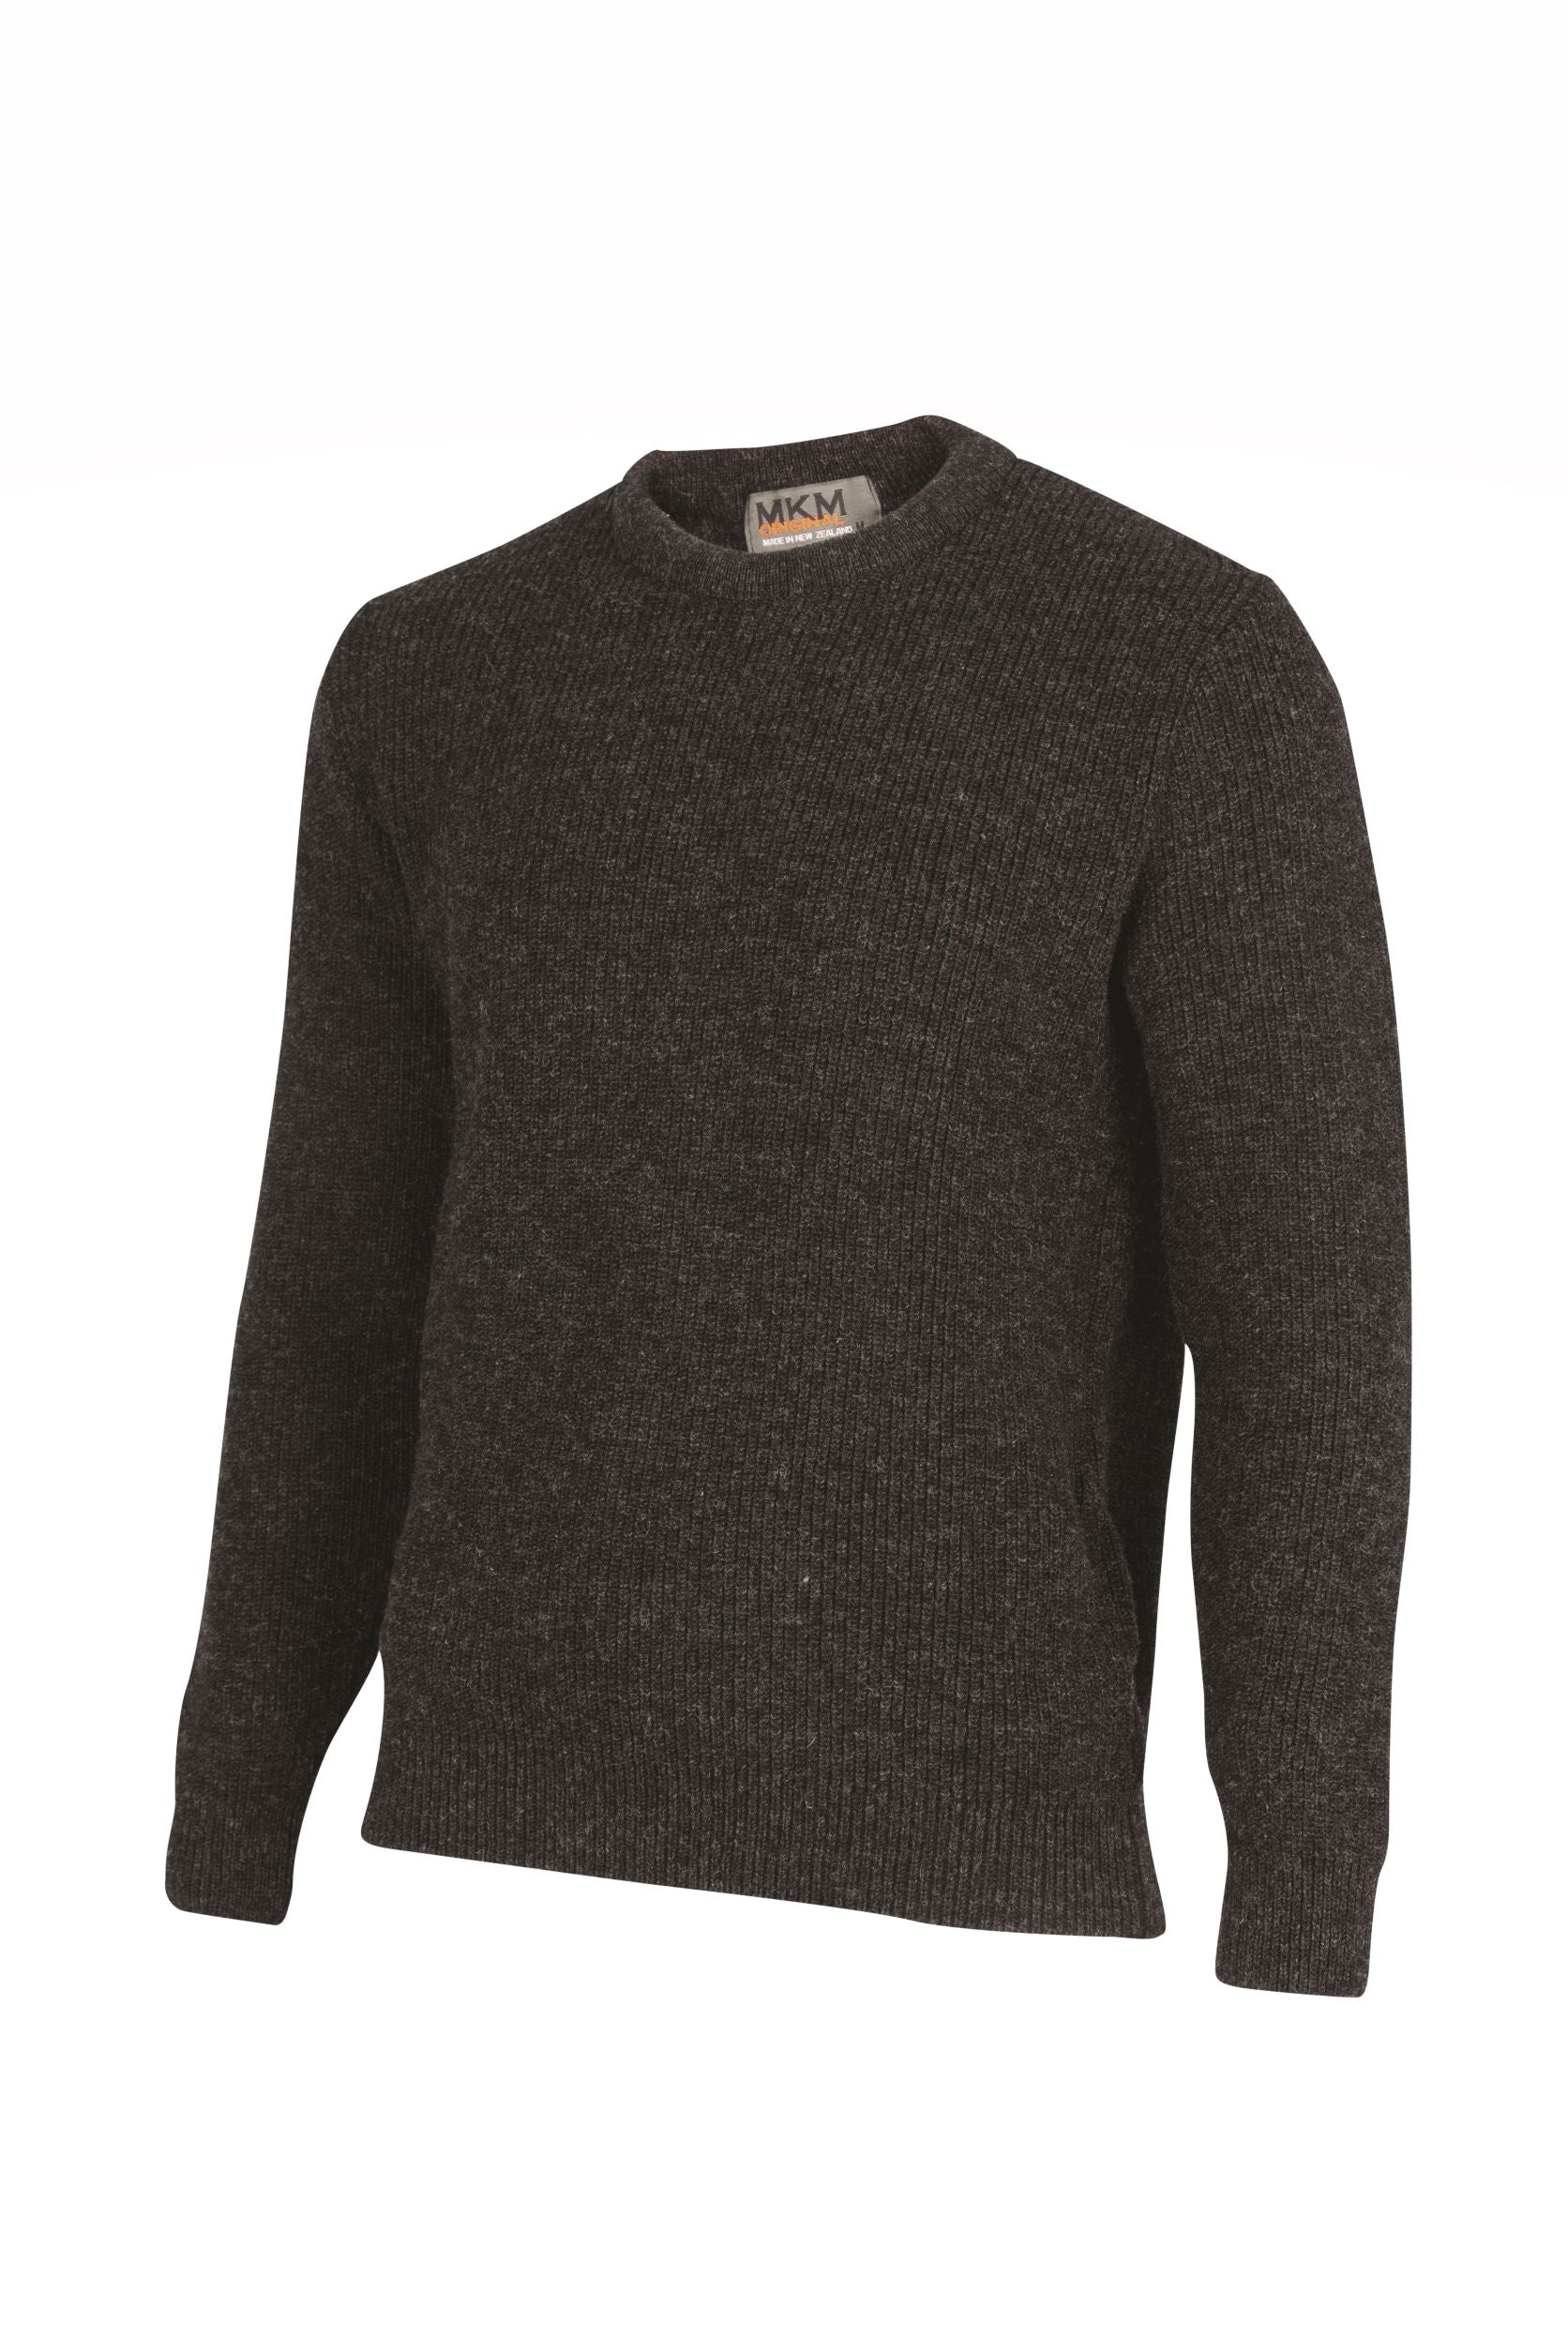 Merino Wool Backyard Crew Sweater - MKM Knitwear